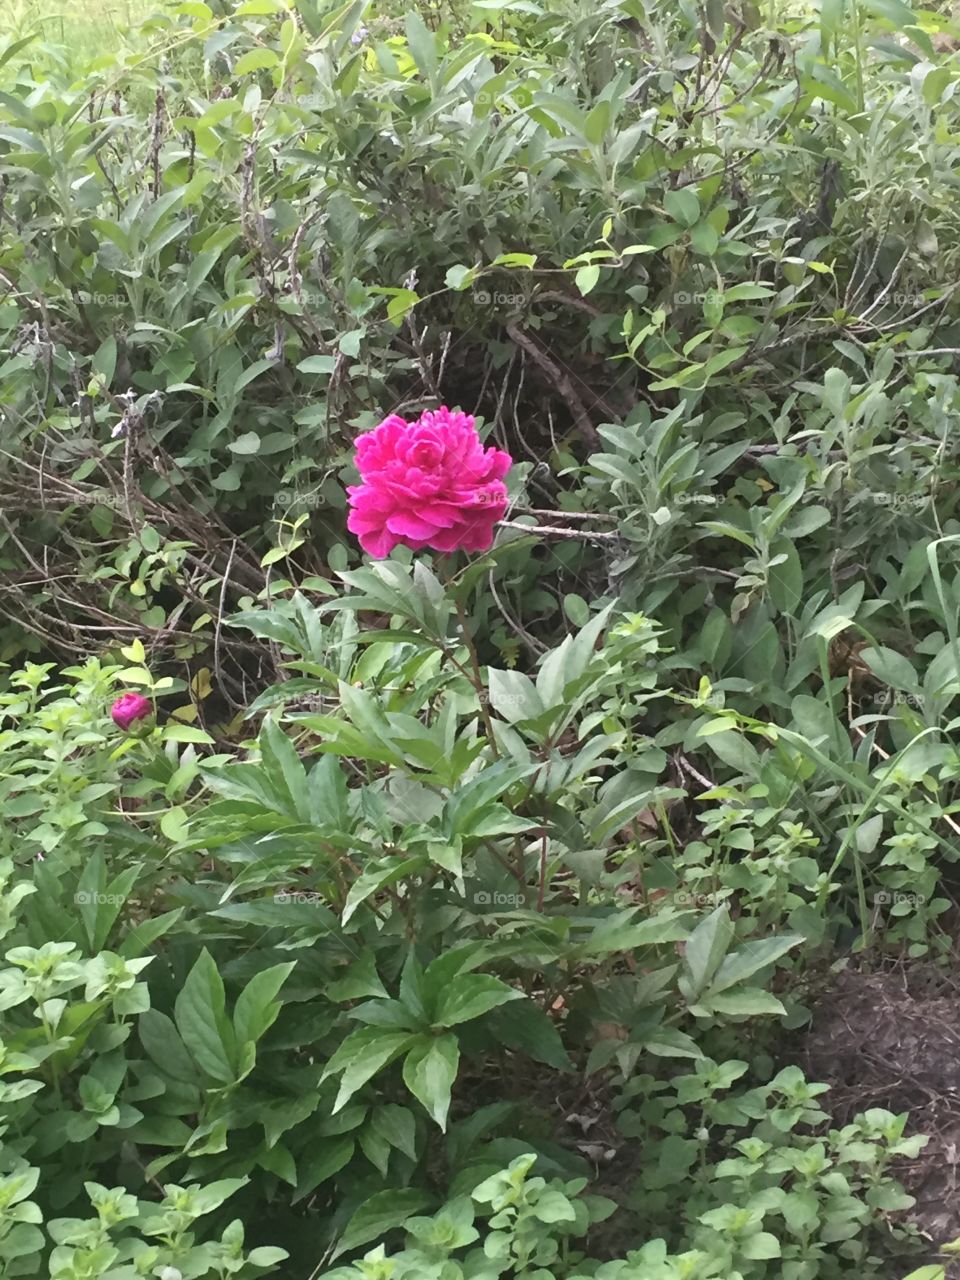 Flower growing in the wild